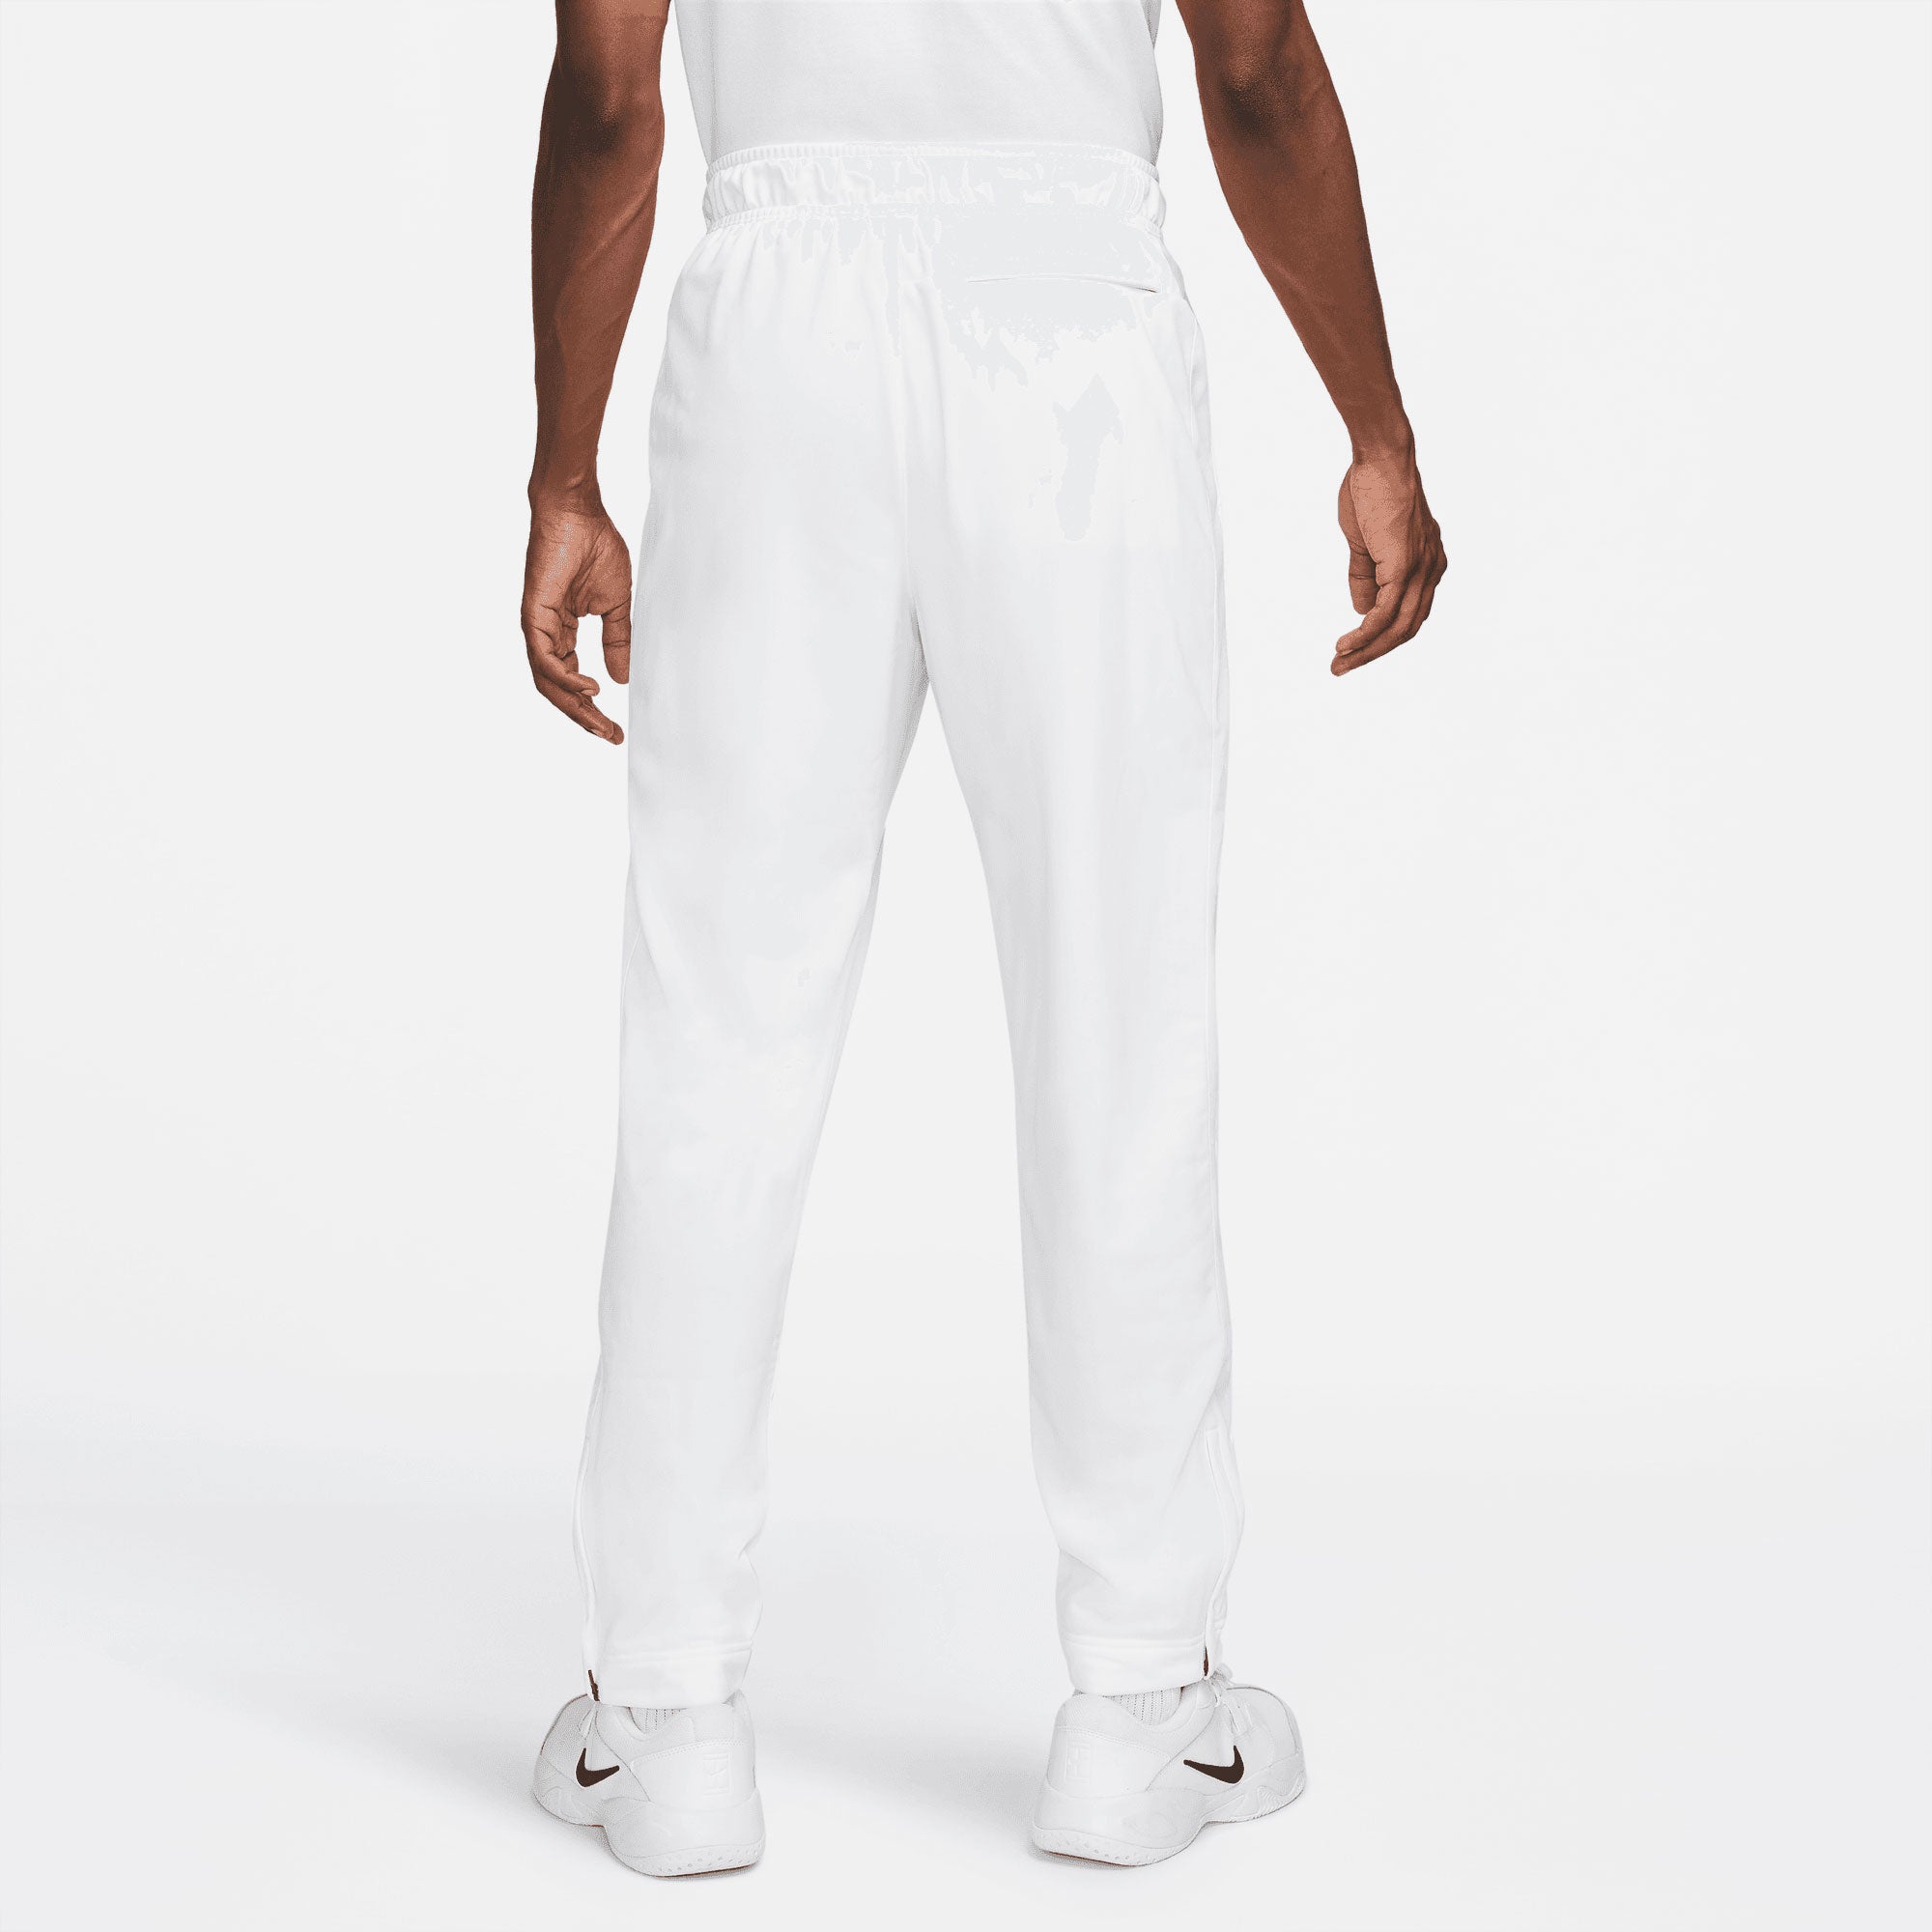 NikeCourt Heritage Men's Tennis Pants White (2)